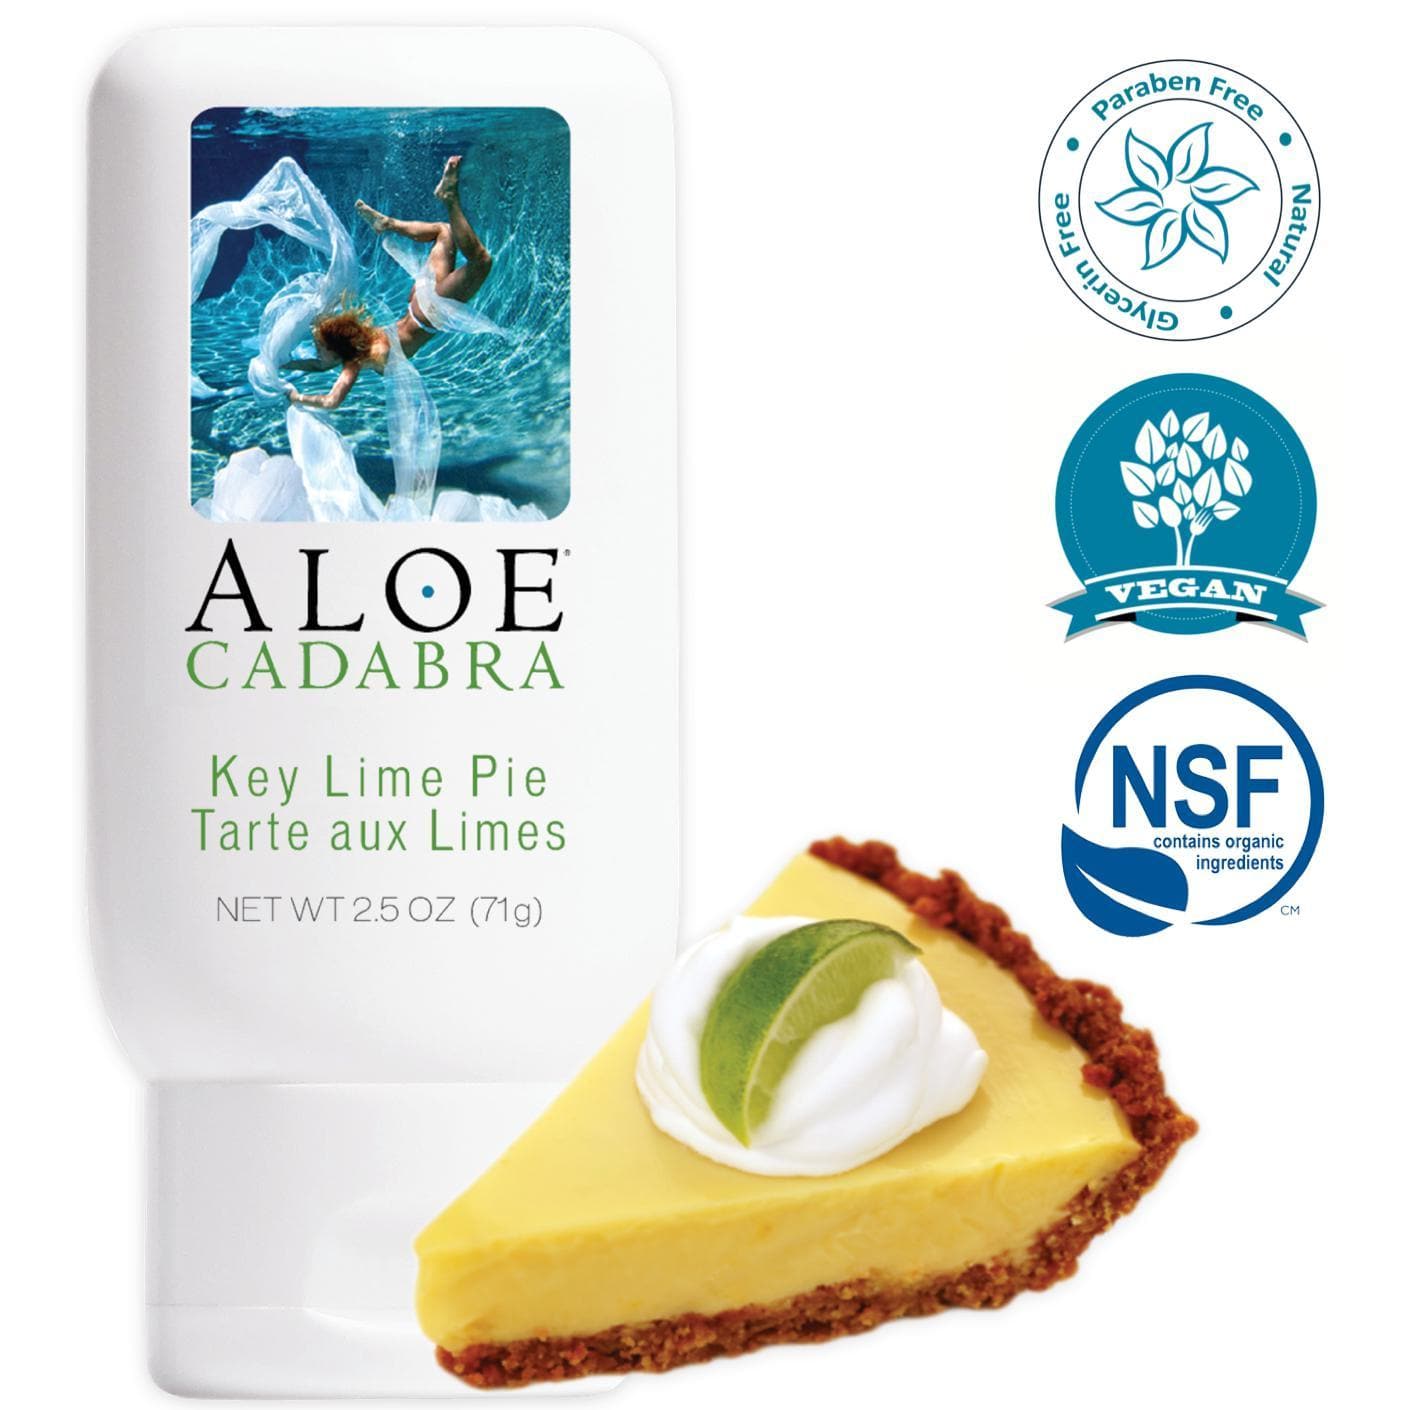 Aloe Cadabra Organic 2-in-1 Personal Lubricant & Vaginal Moisturizer Key Lime Pie 2.5 oz - Romantic Blessings